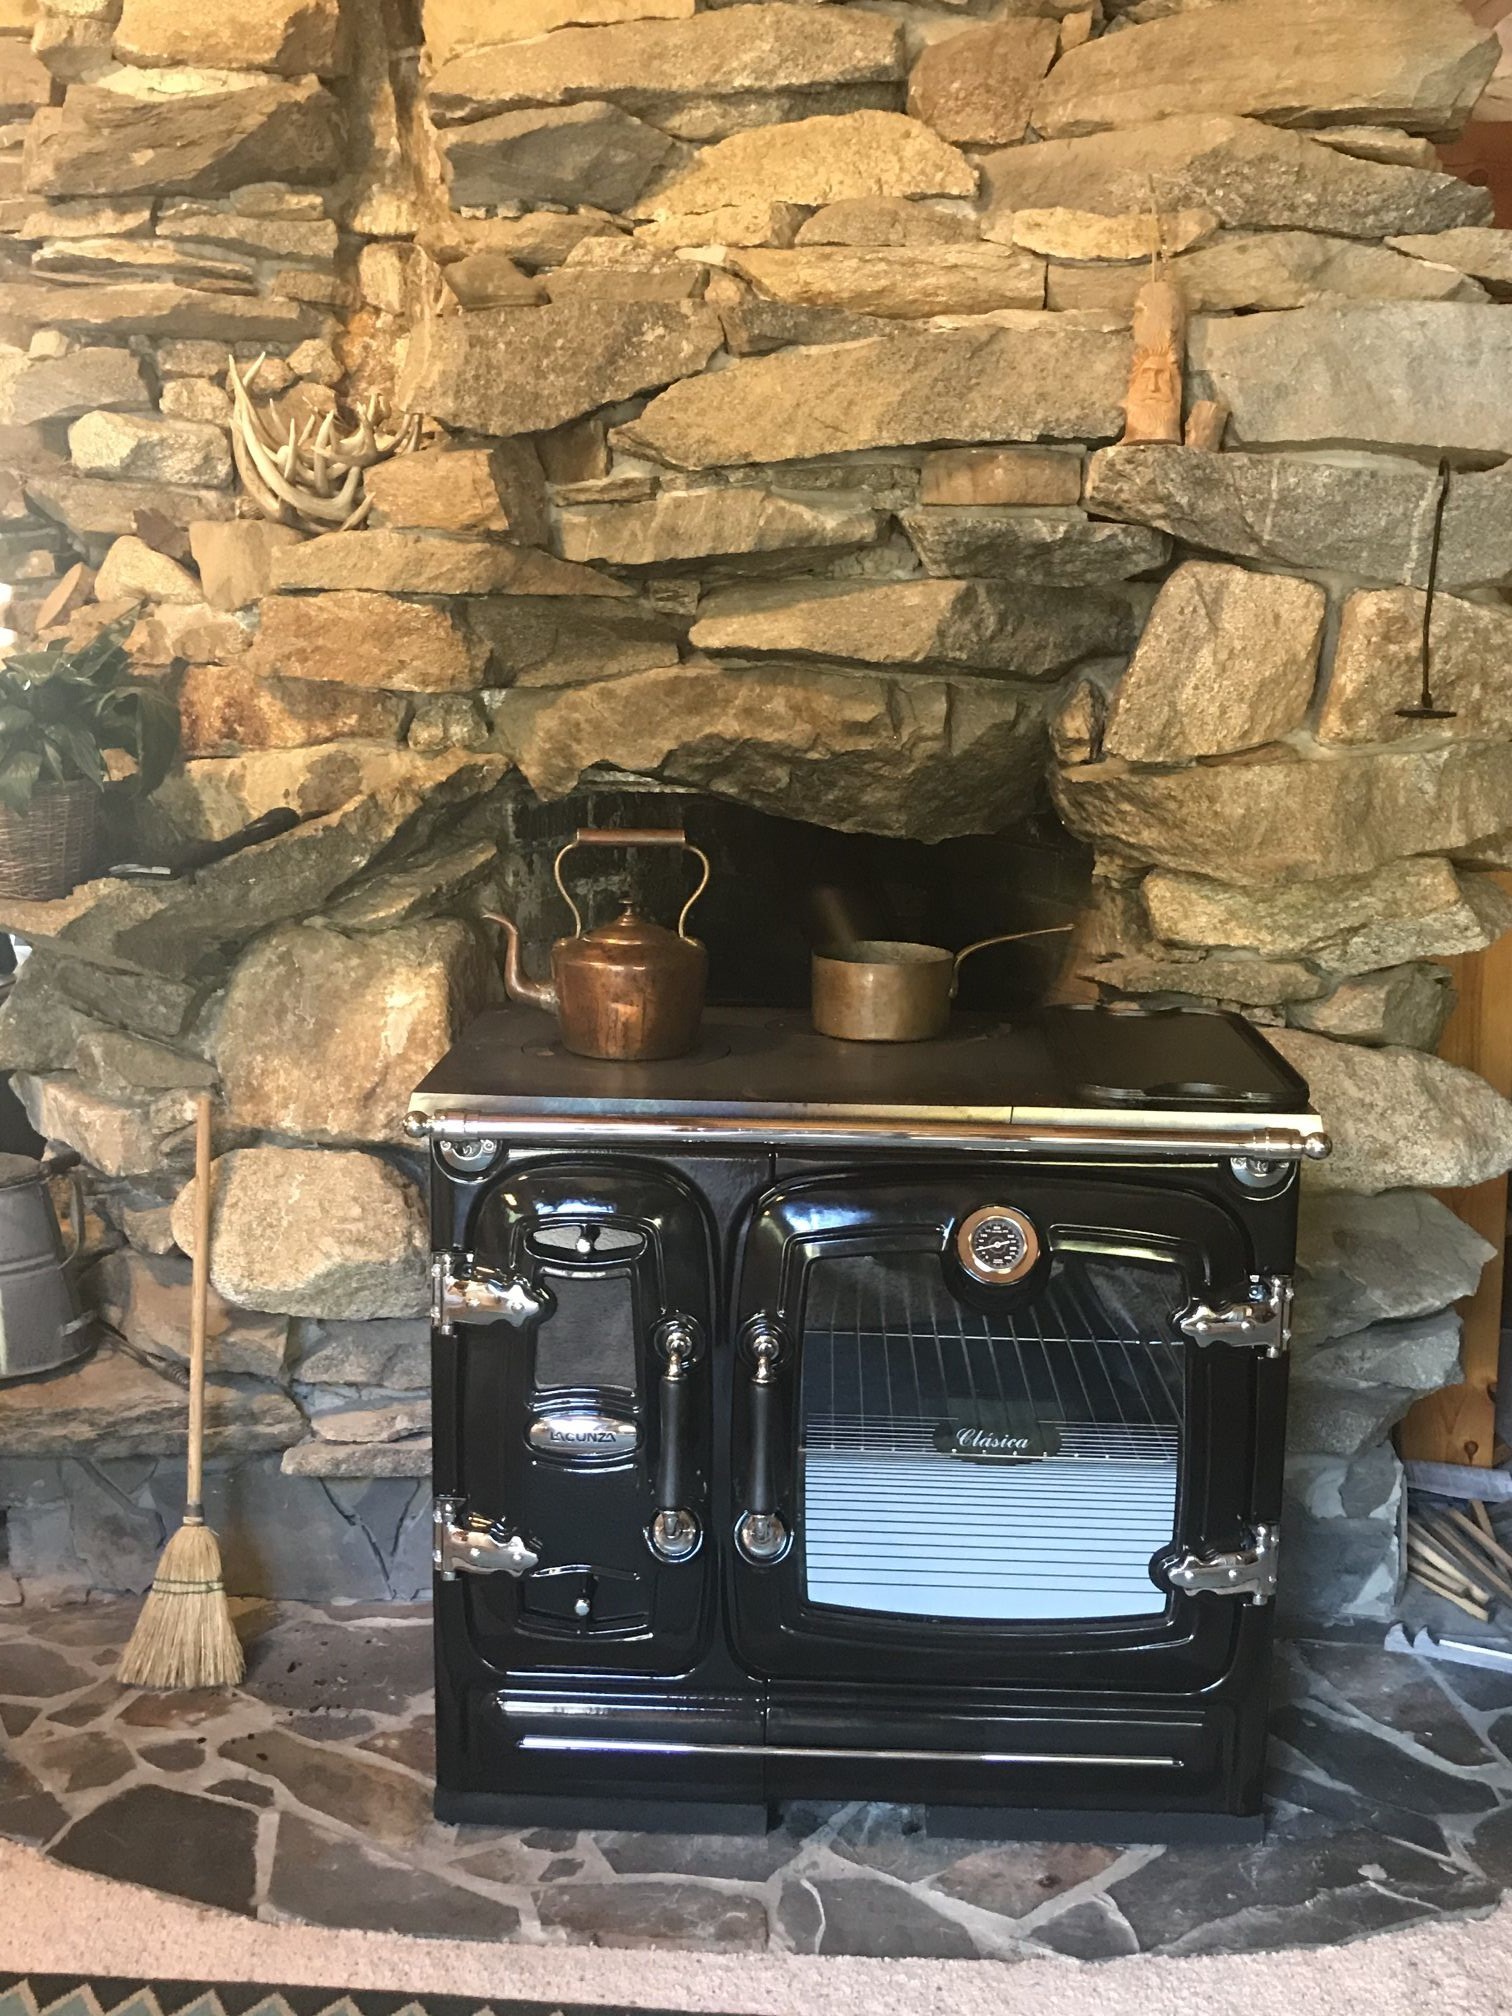 https://www.woodcookstove.com//media/catalog/product/cache/1/image/9df78eab33525d08d6e5fb8d27136e95/c/a/cast-iron-stove.jpg